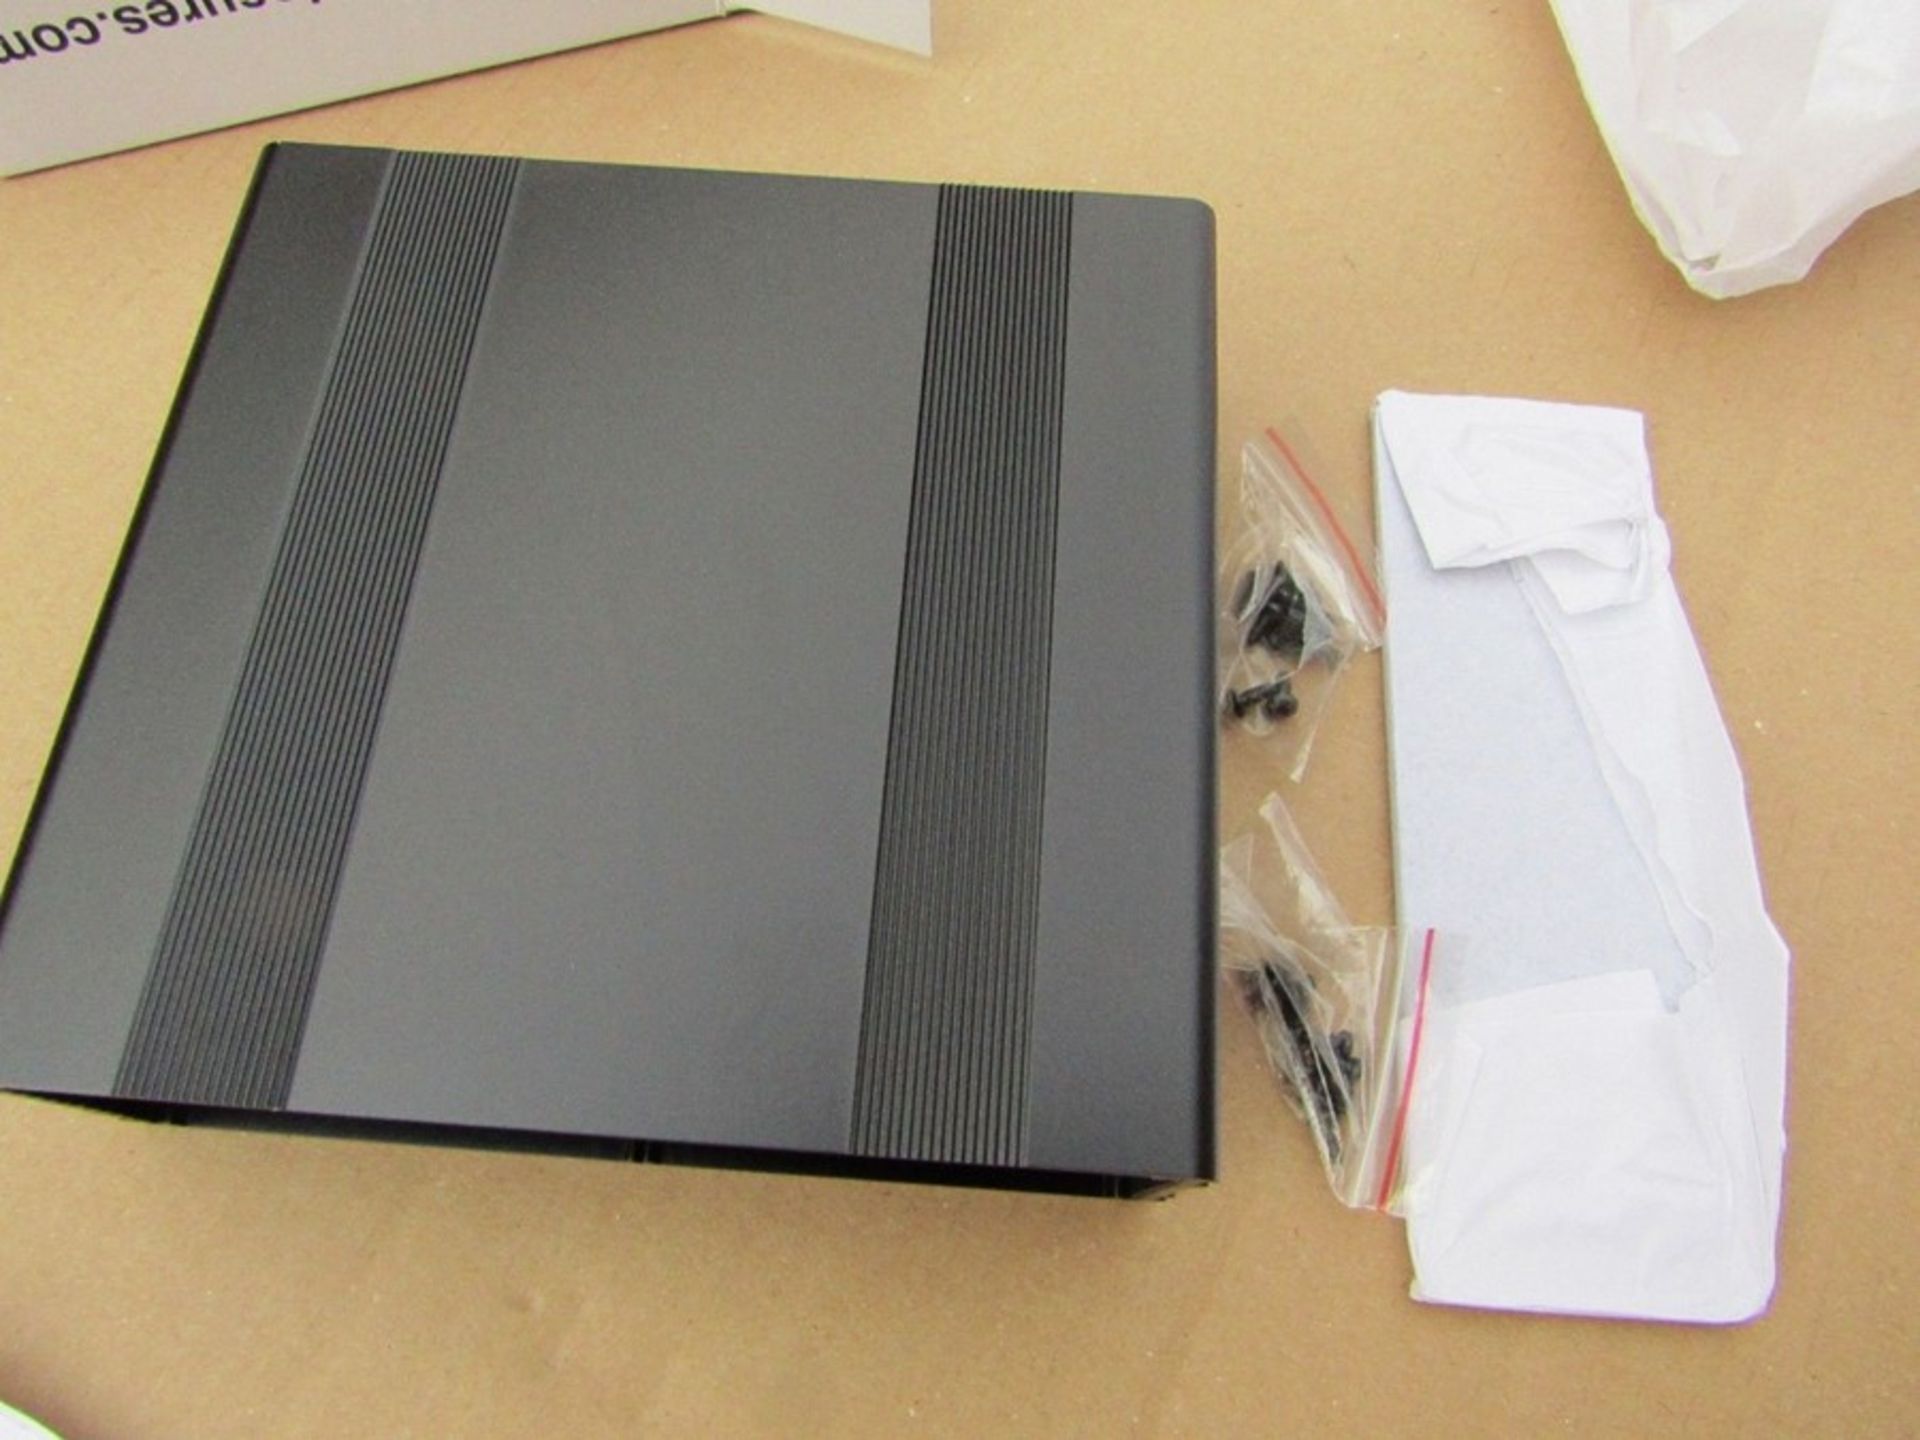 20 x BOX Bex 4 Black Aluminium Enclosure Instrument Case 160.5x169.8x53.5mm £300 retail H7L 1046135